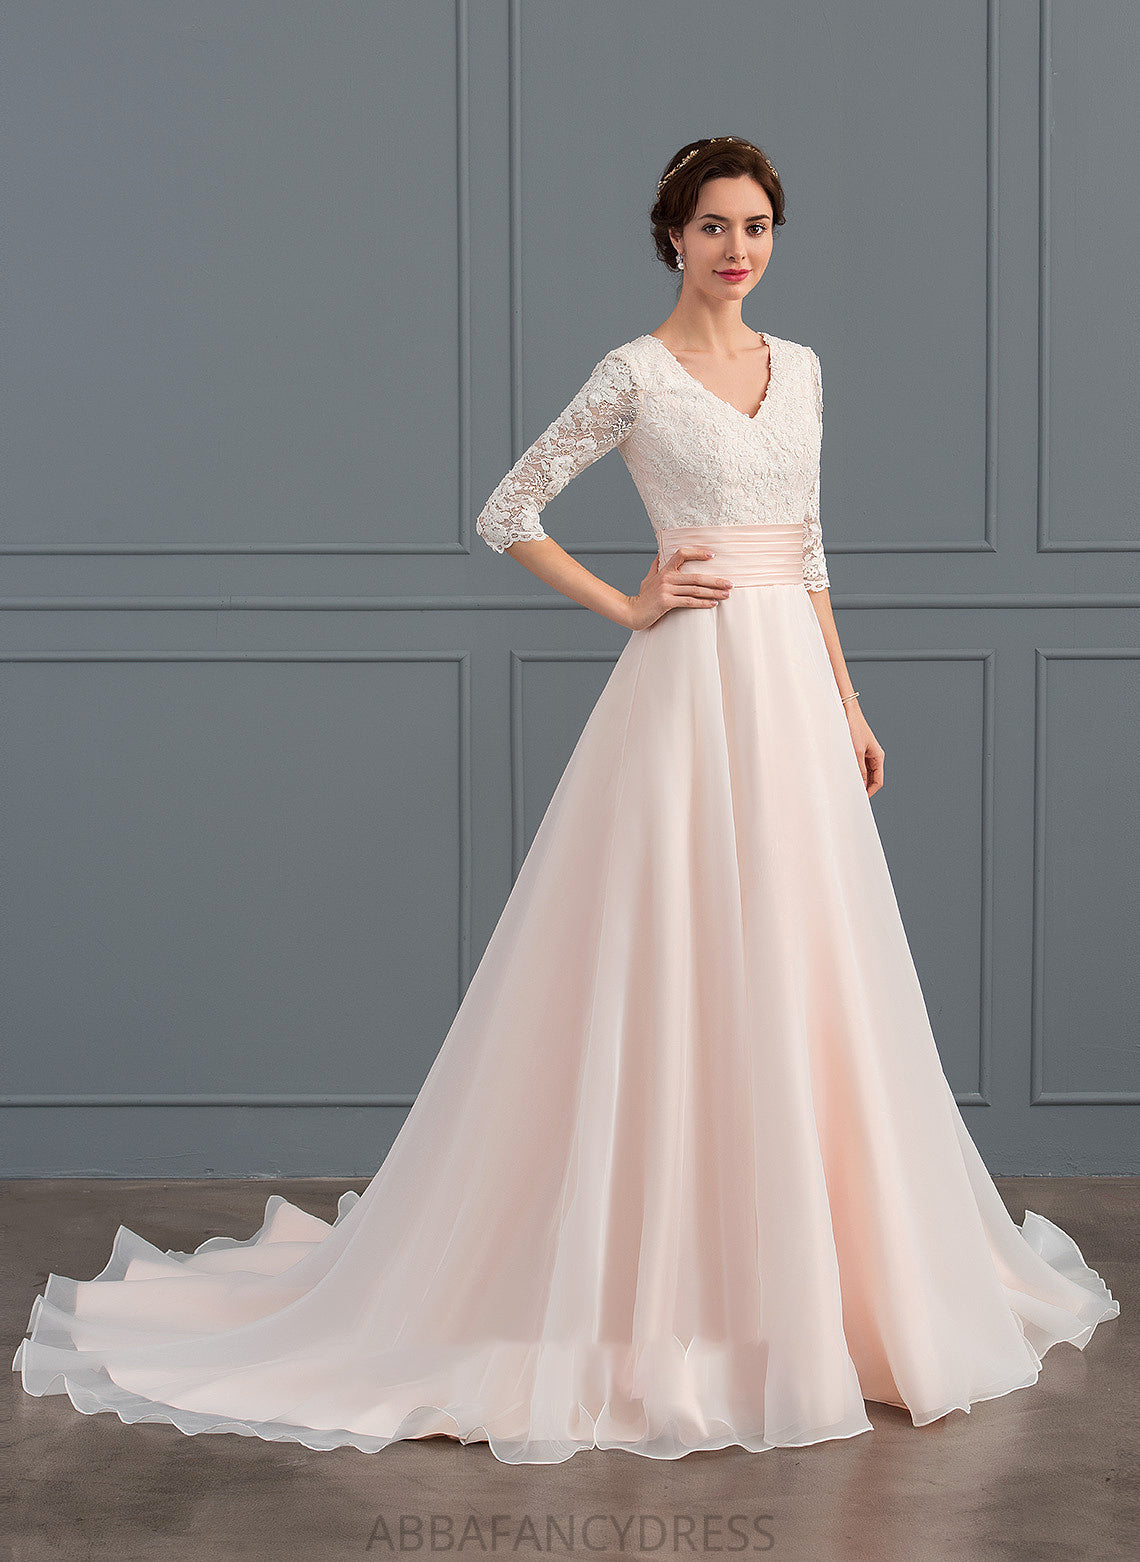 Ball-Gown/Princess Dress Wedding With Organza Train Wedding Dresses Ruffle V-neck Court Bryanna